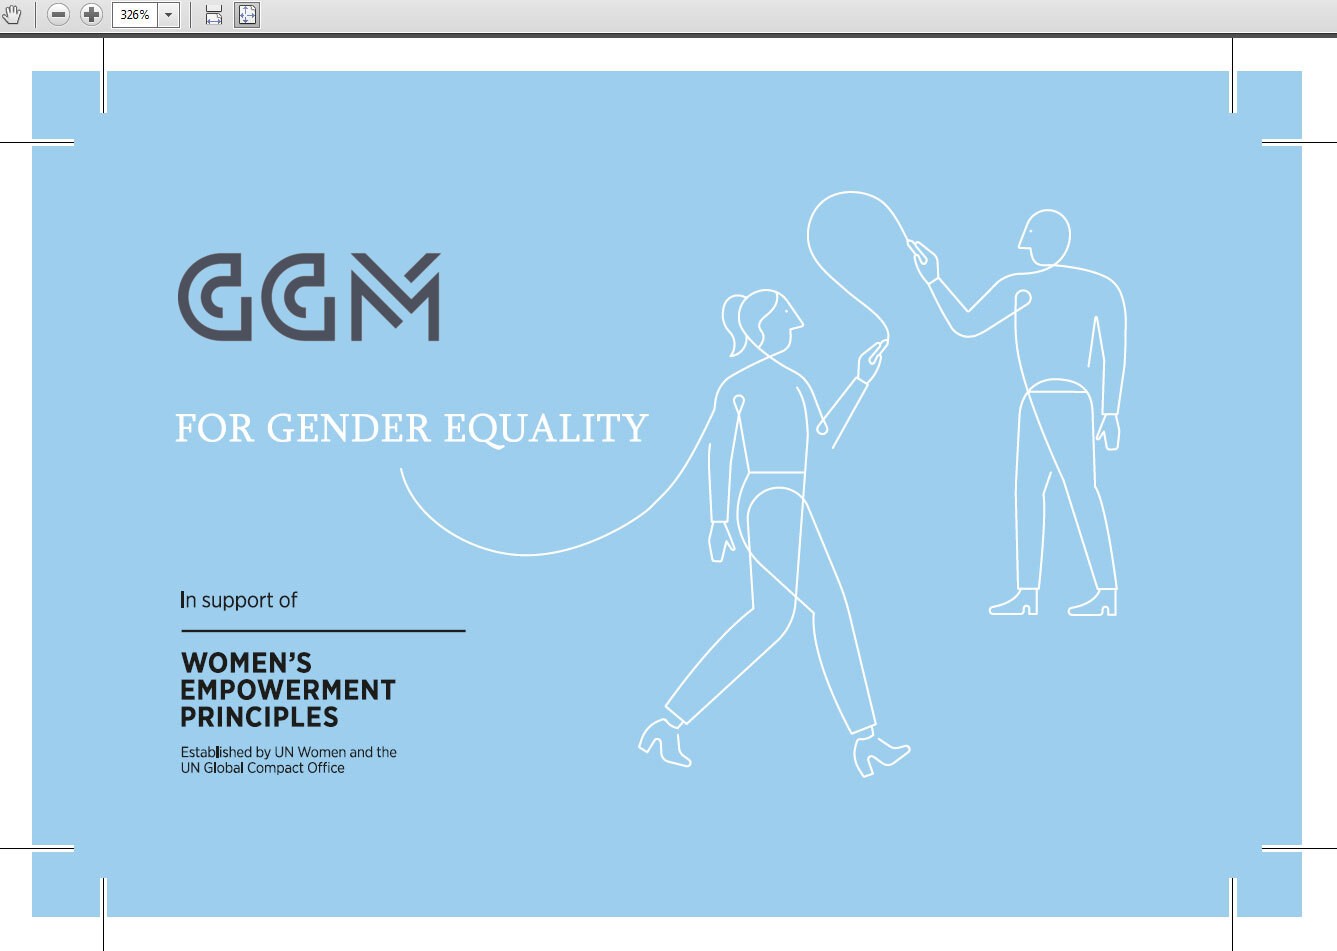 GGM has signed the Women's Empowerment Principles